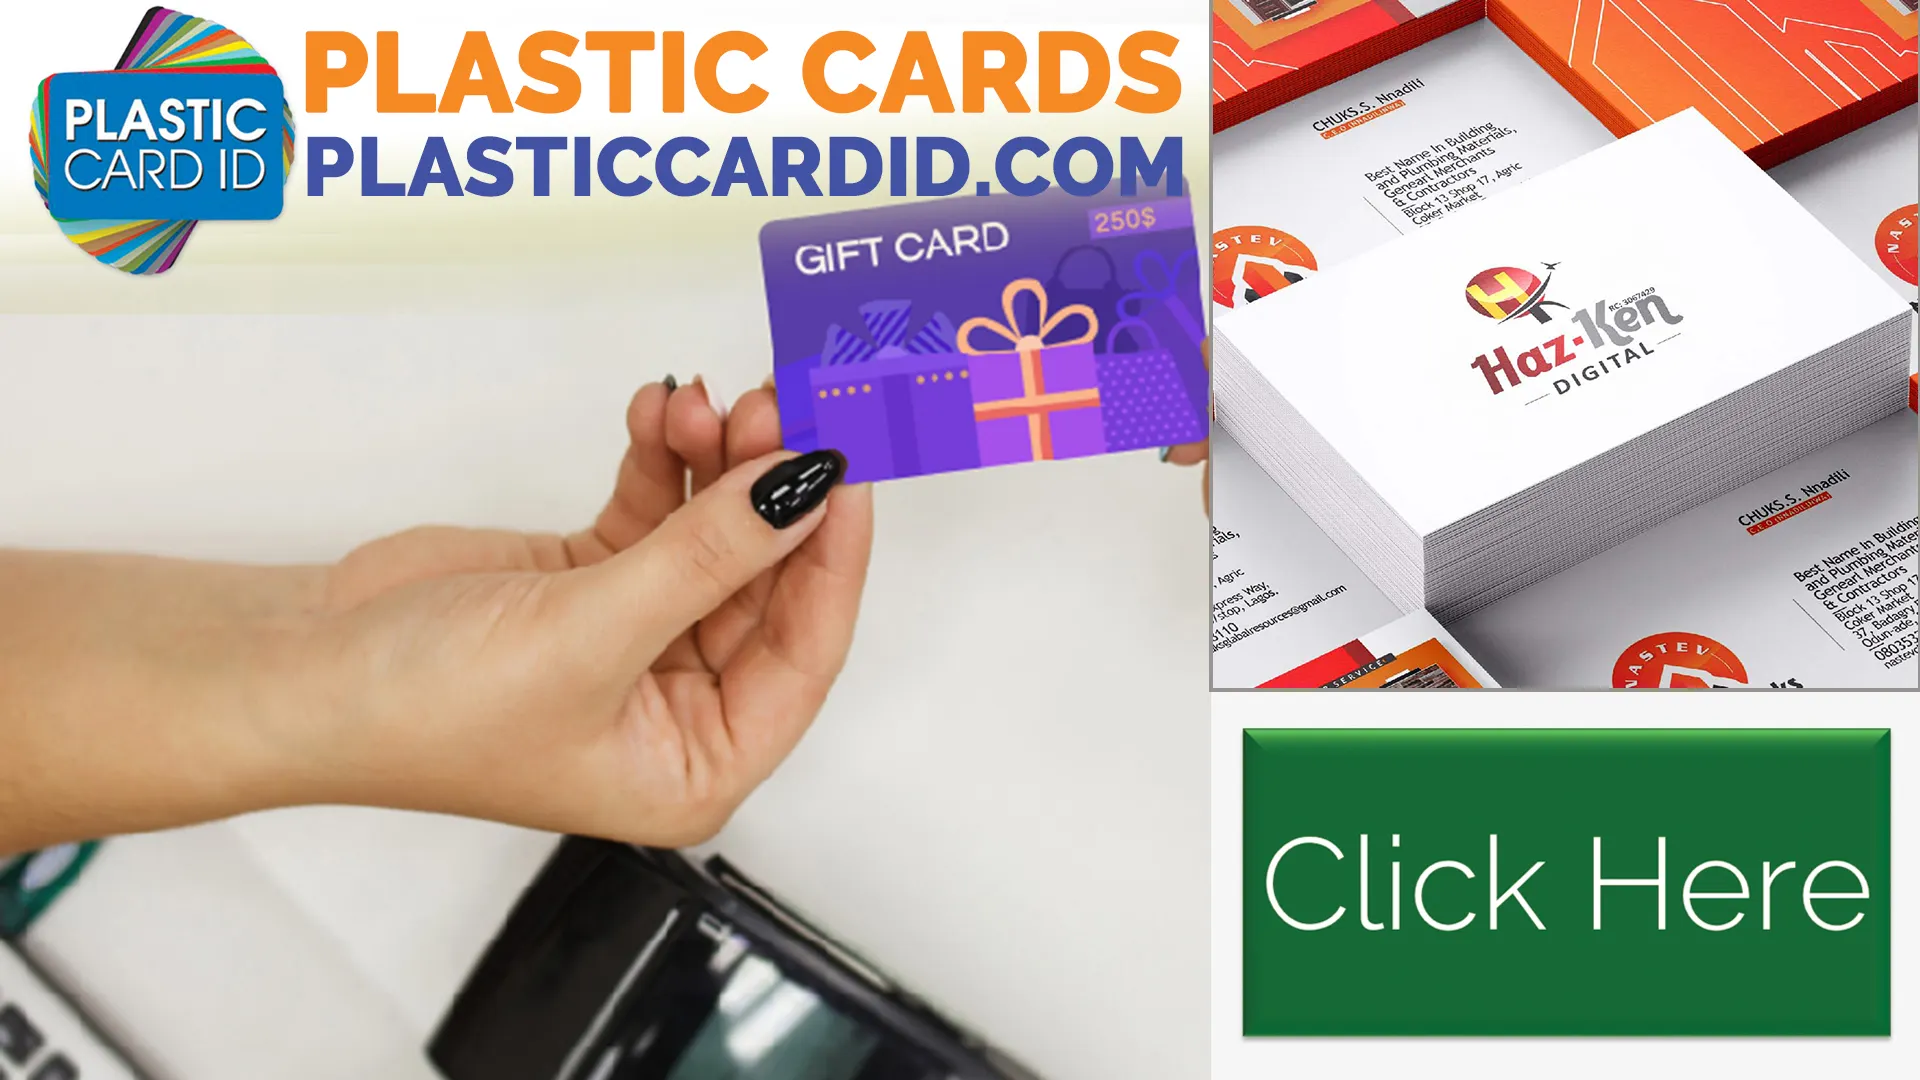 Custom Plastic Card Designs: Make Your Mark